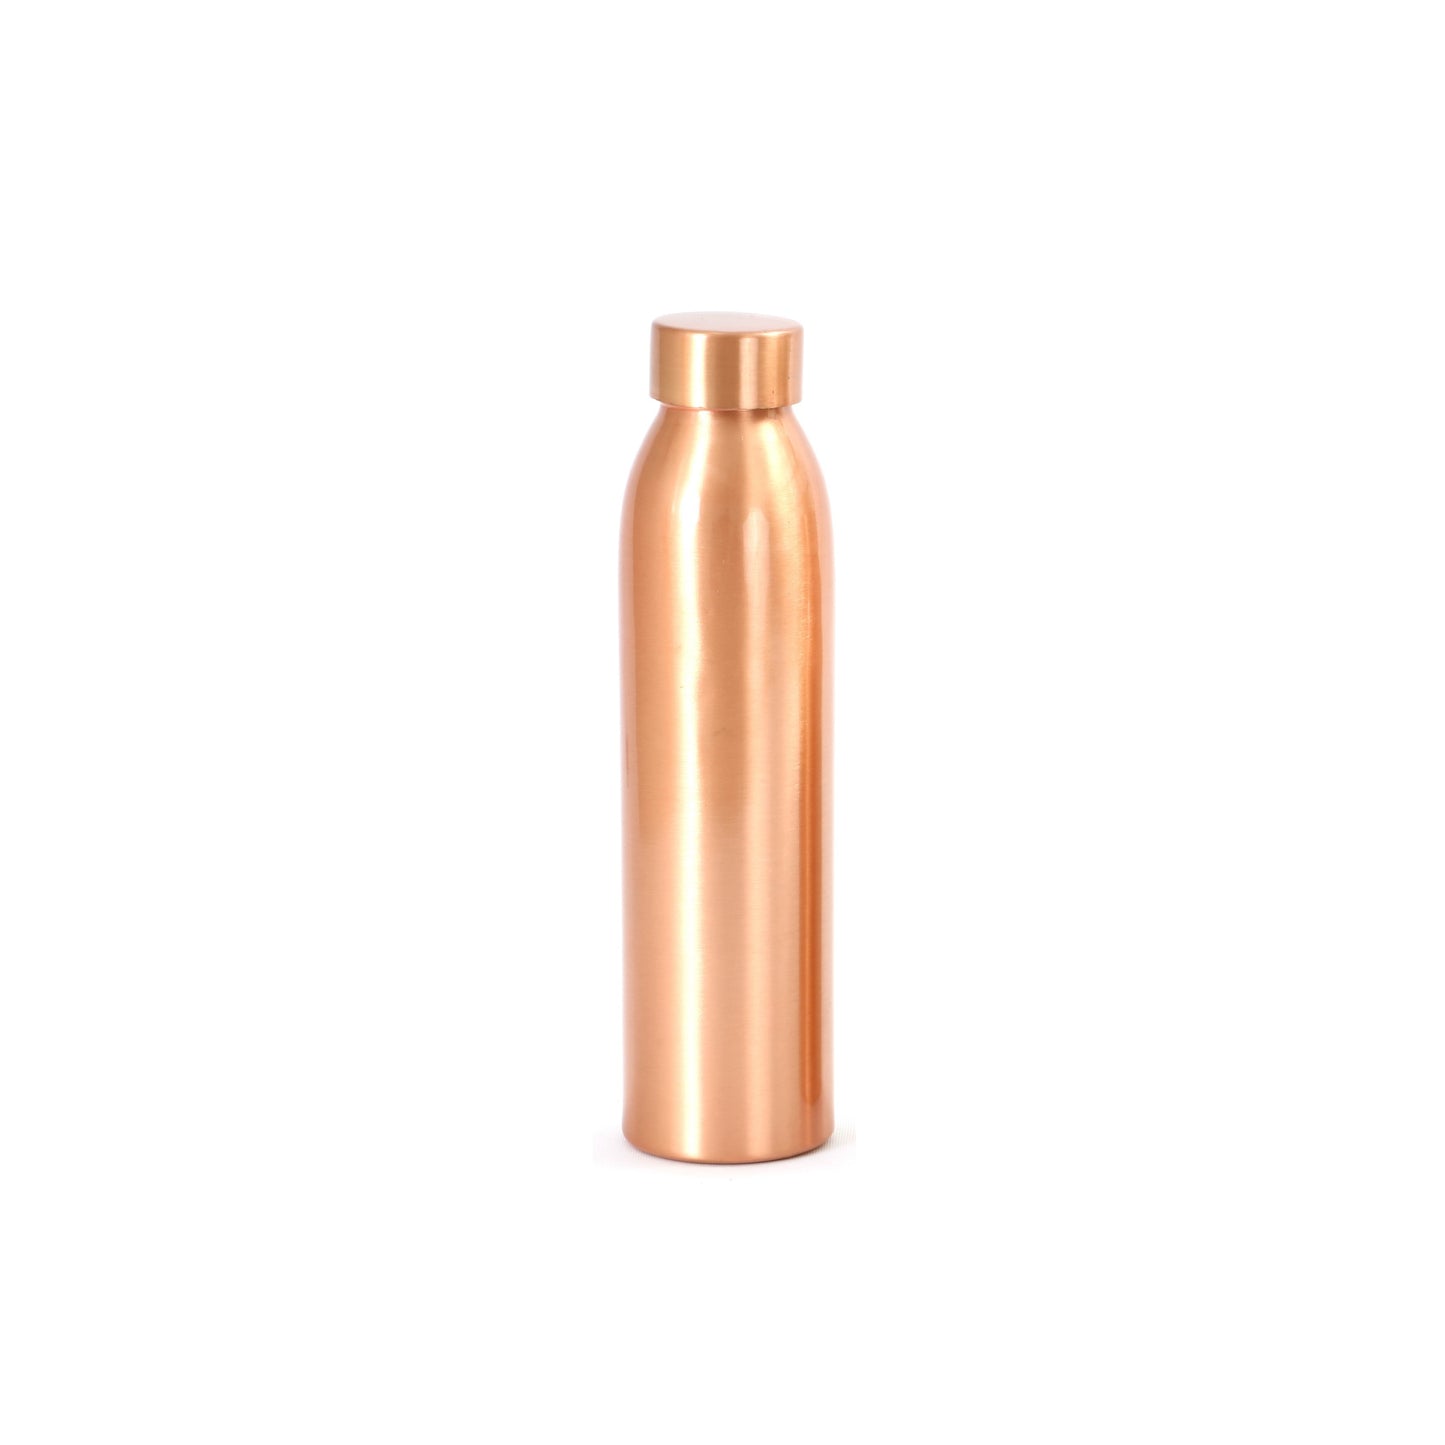 Pure Premium Copper Bottles - Cuir Ally Smart Goods